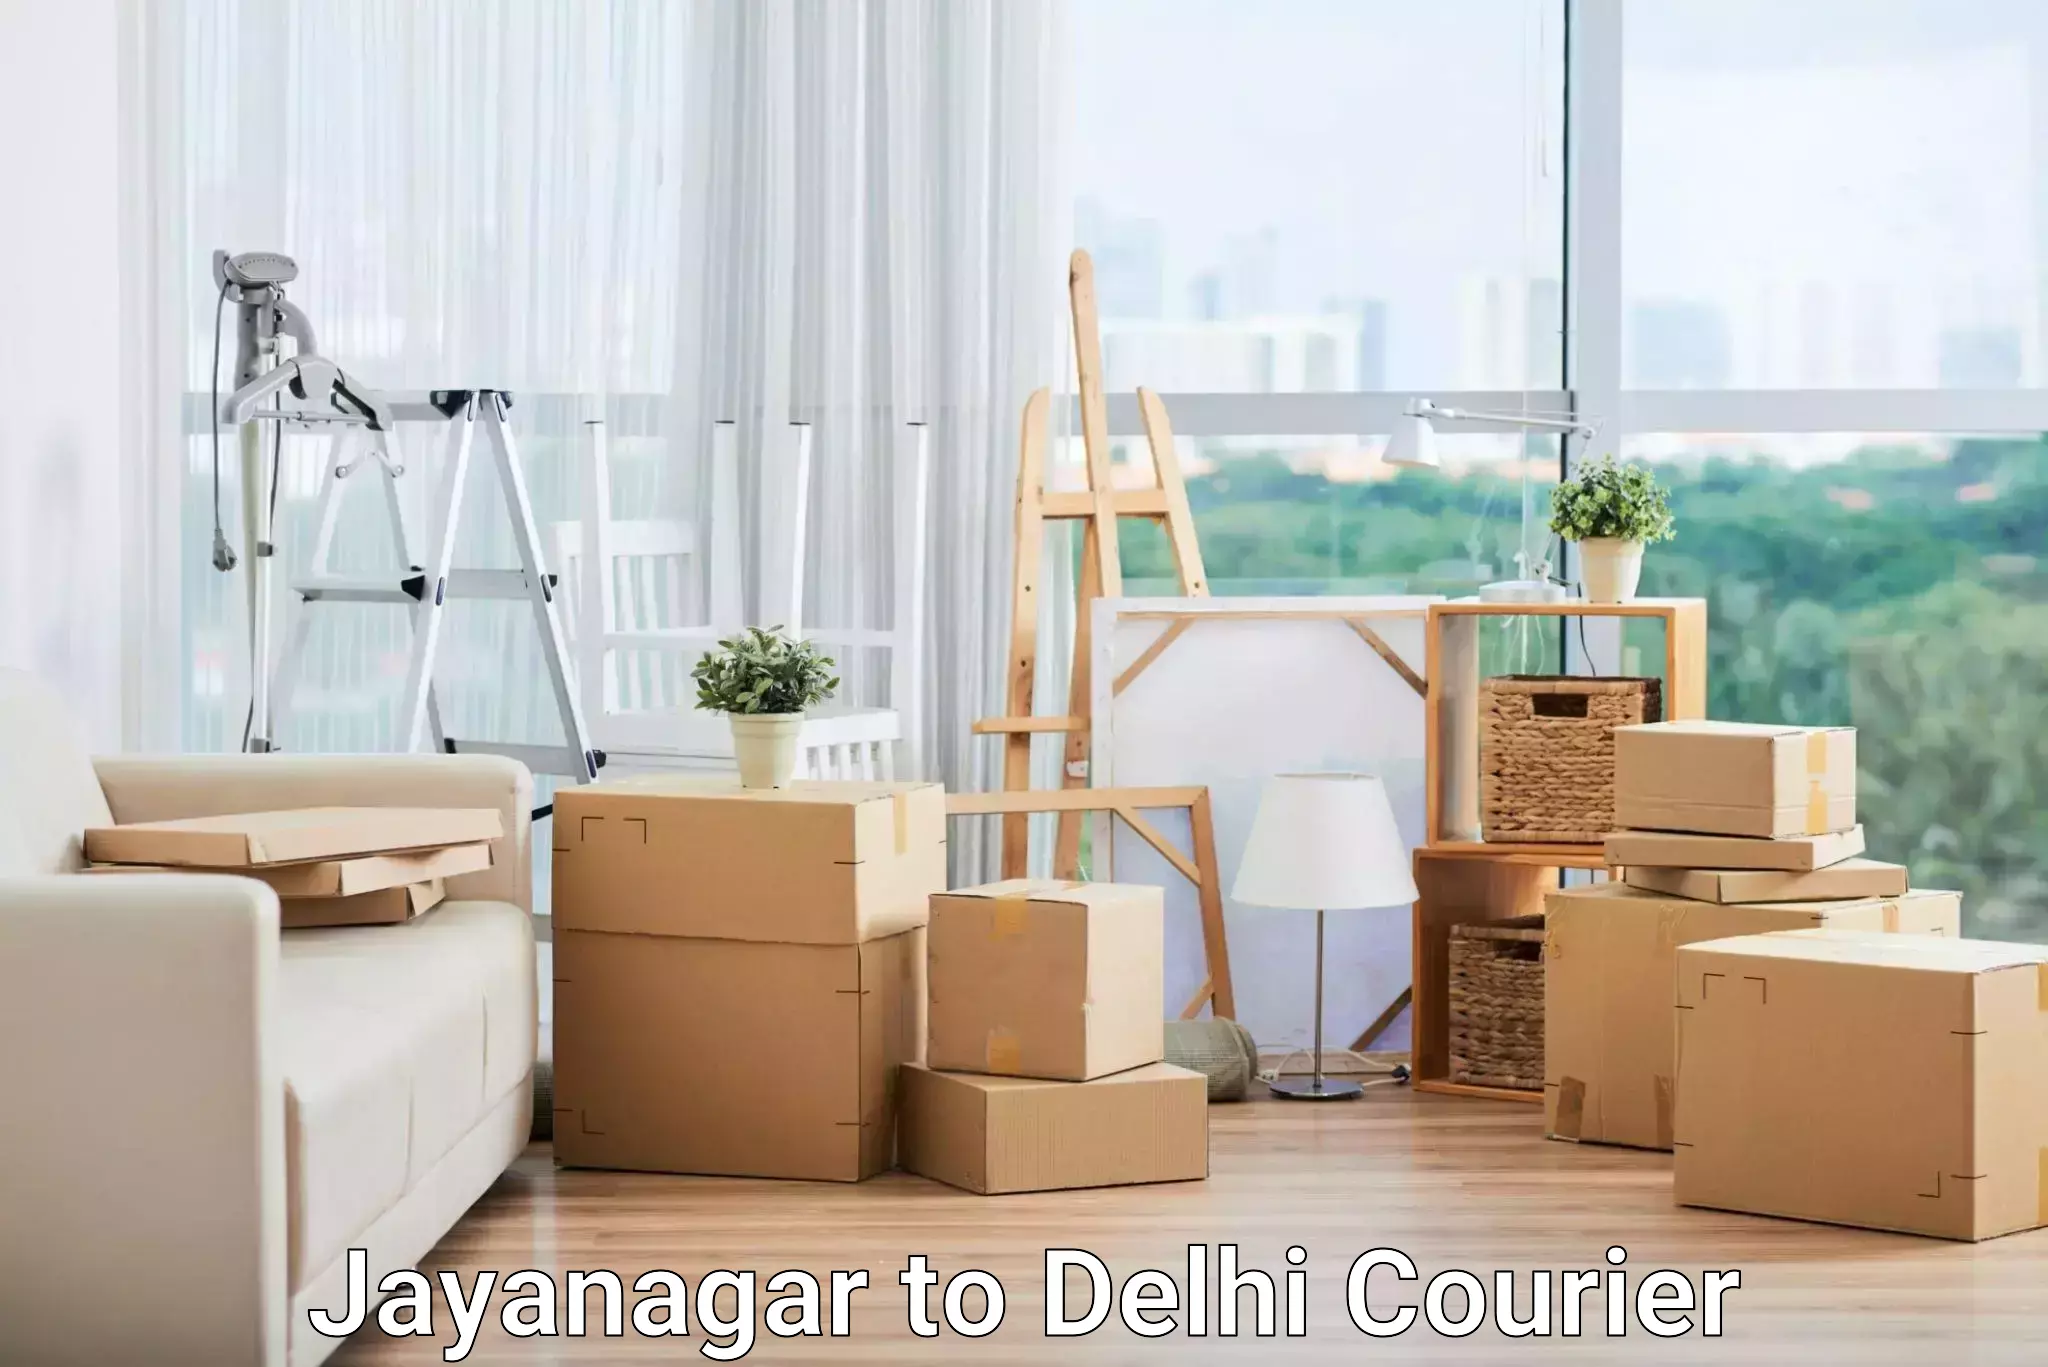 Global logistics network Jayanagar to East Delhi